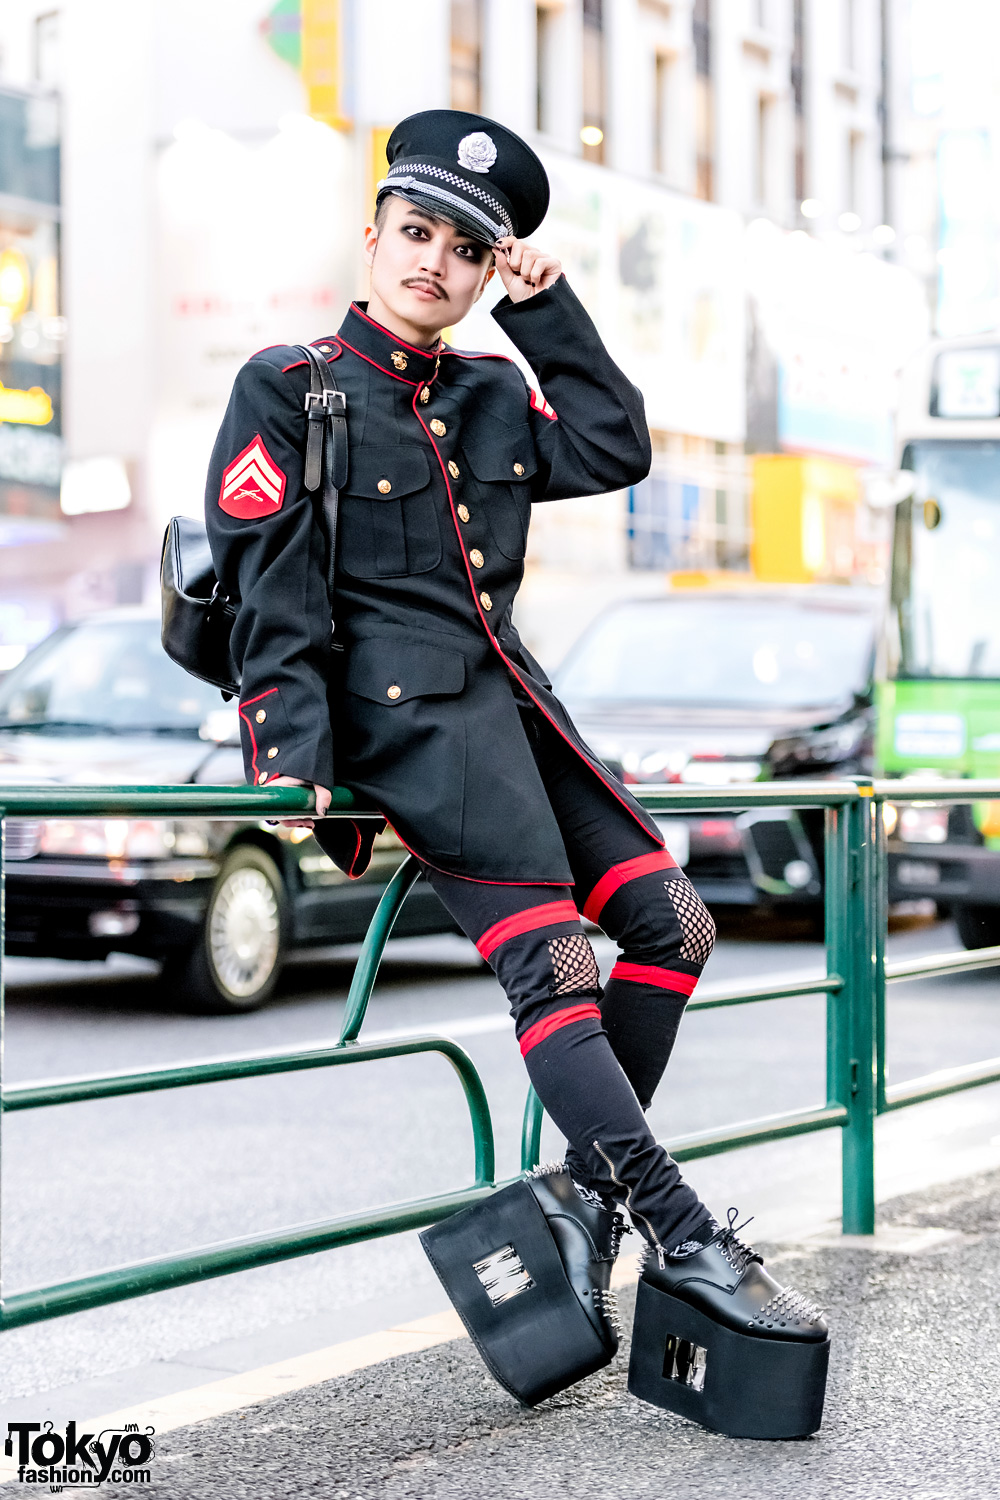 Japanese DJ in Military-Inspired Tokyo Streetwear w/ Vintage Navy Coat, MilkBoy Cutout Pants & Giant Platform Monster Shoes